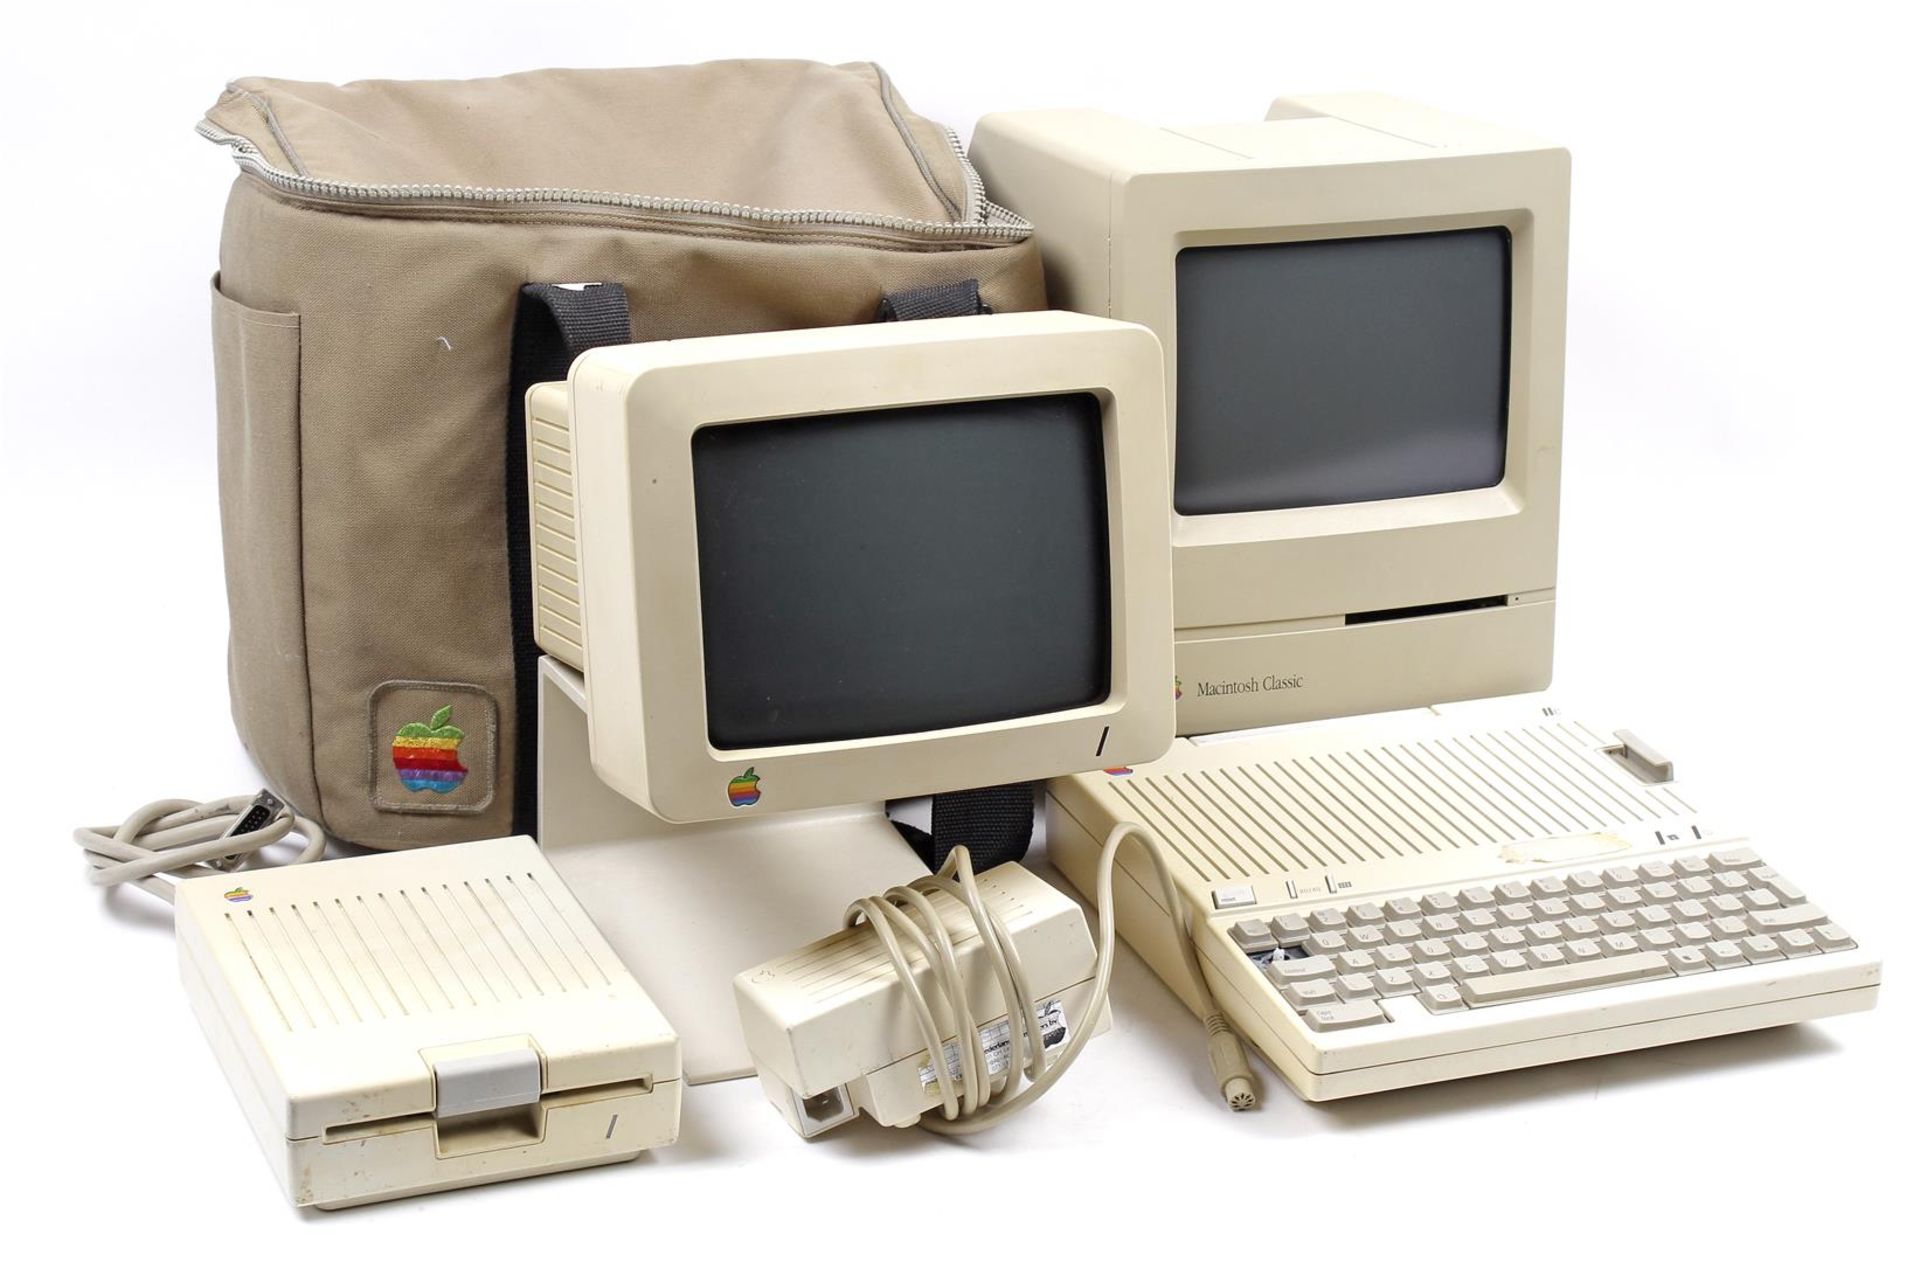 Macintosh computer monitor, Apple computer parts